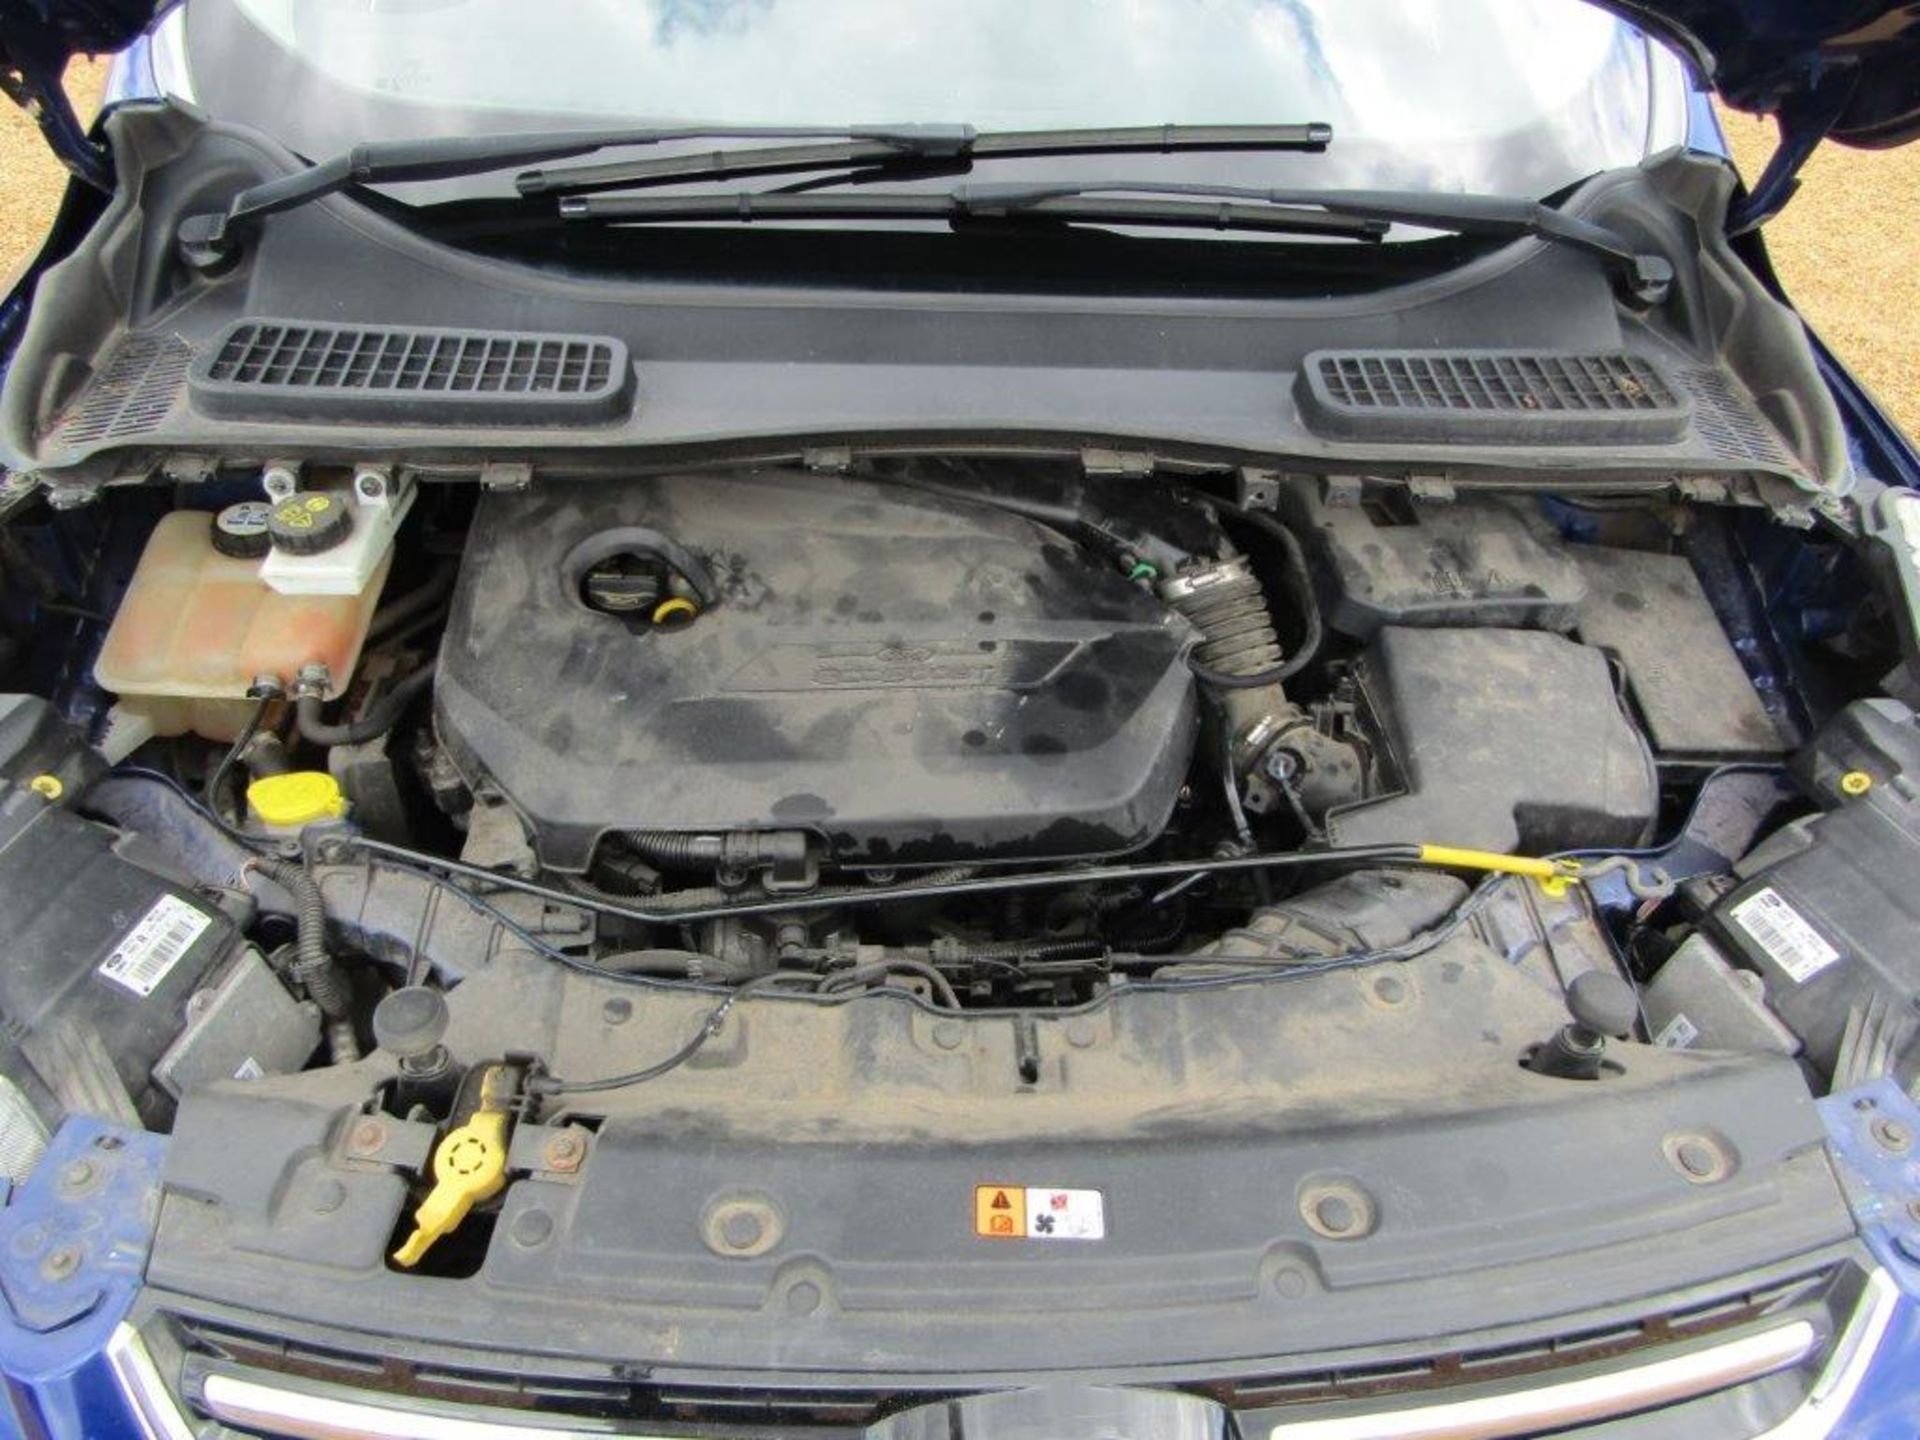 64 14 Ford Kuga Titanium X 4X4 Turbo - Image 3 of 21